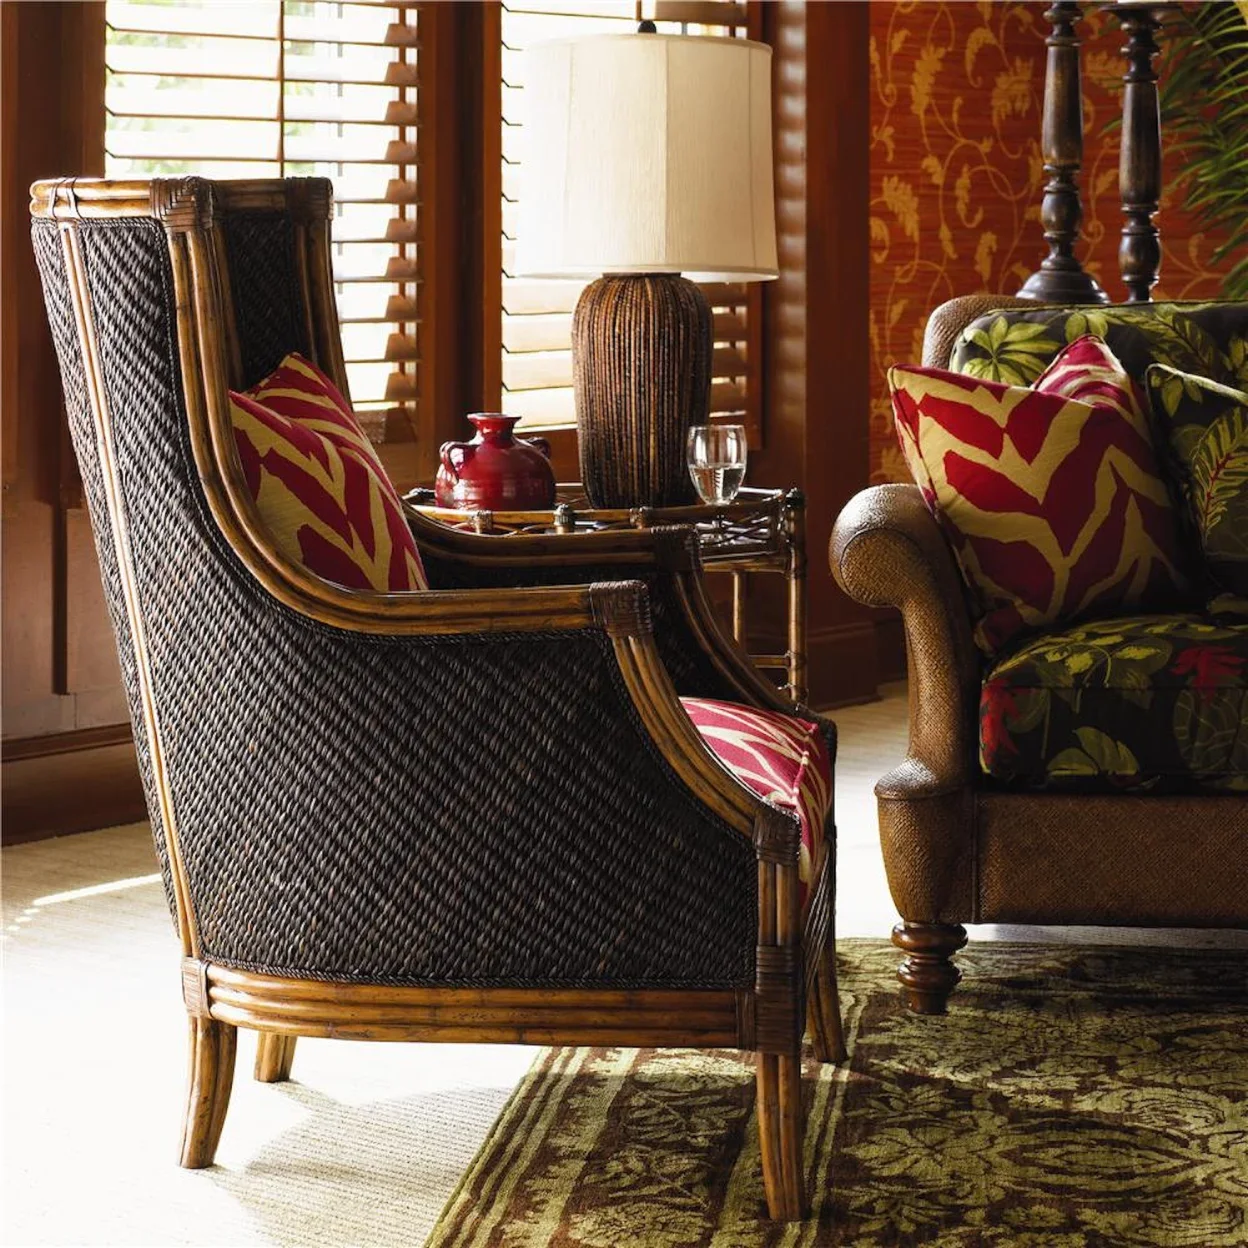 Dark wicker chair in living room setting. 